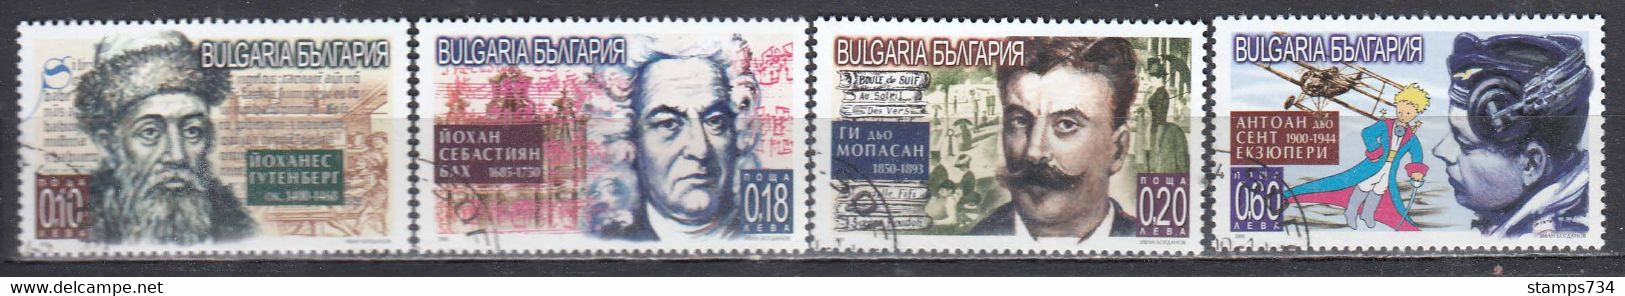 Bulgaria 2000 - Celebrities (Bach, Gutenberg, Saint-Exupery, Maupassant), Mi-Nr. 4467/70, Used - Used Stamps